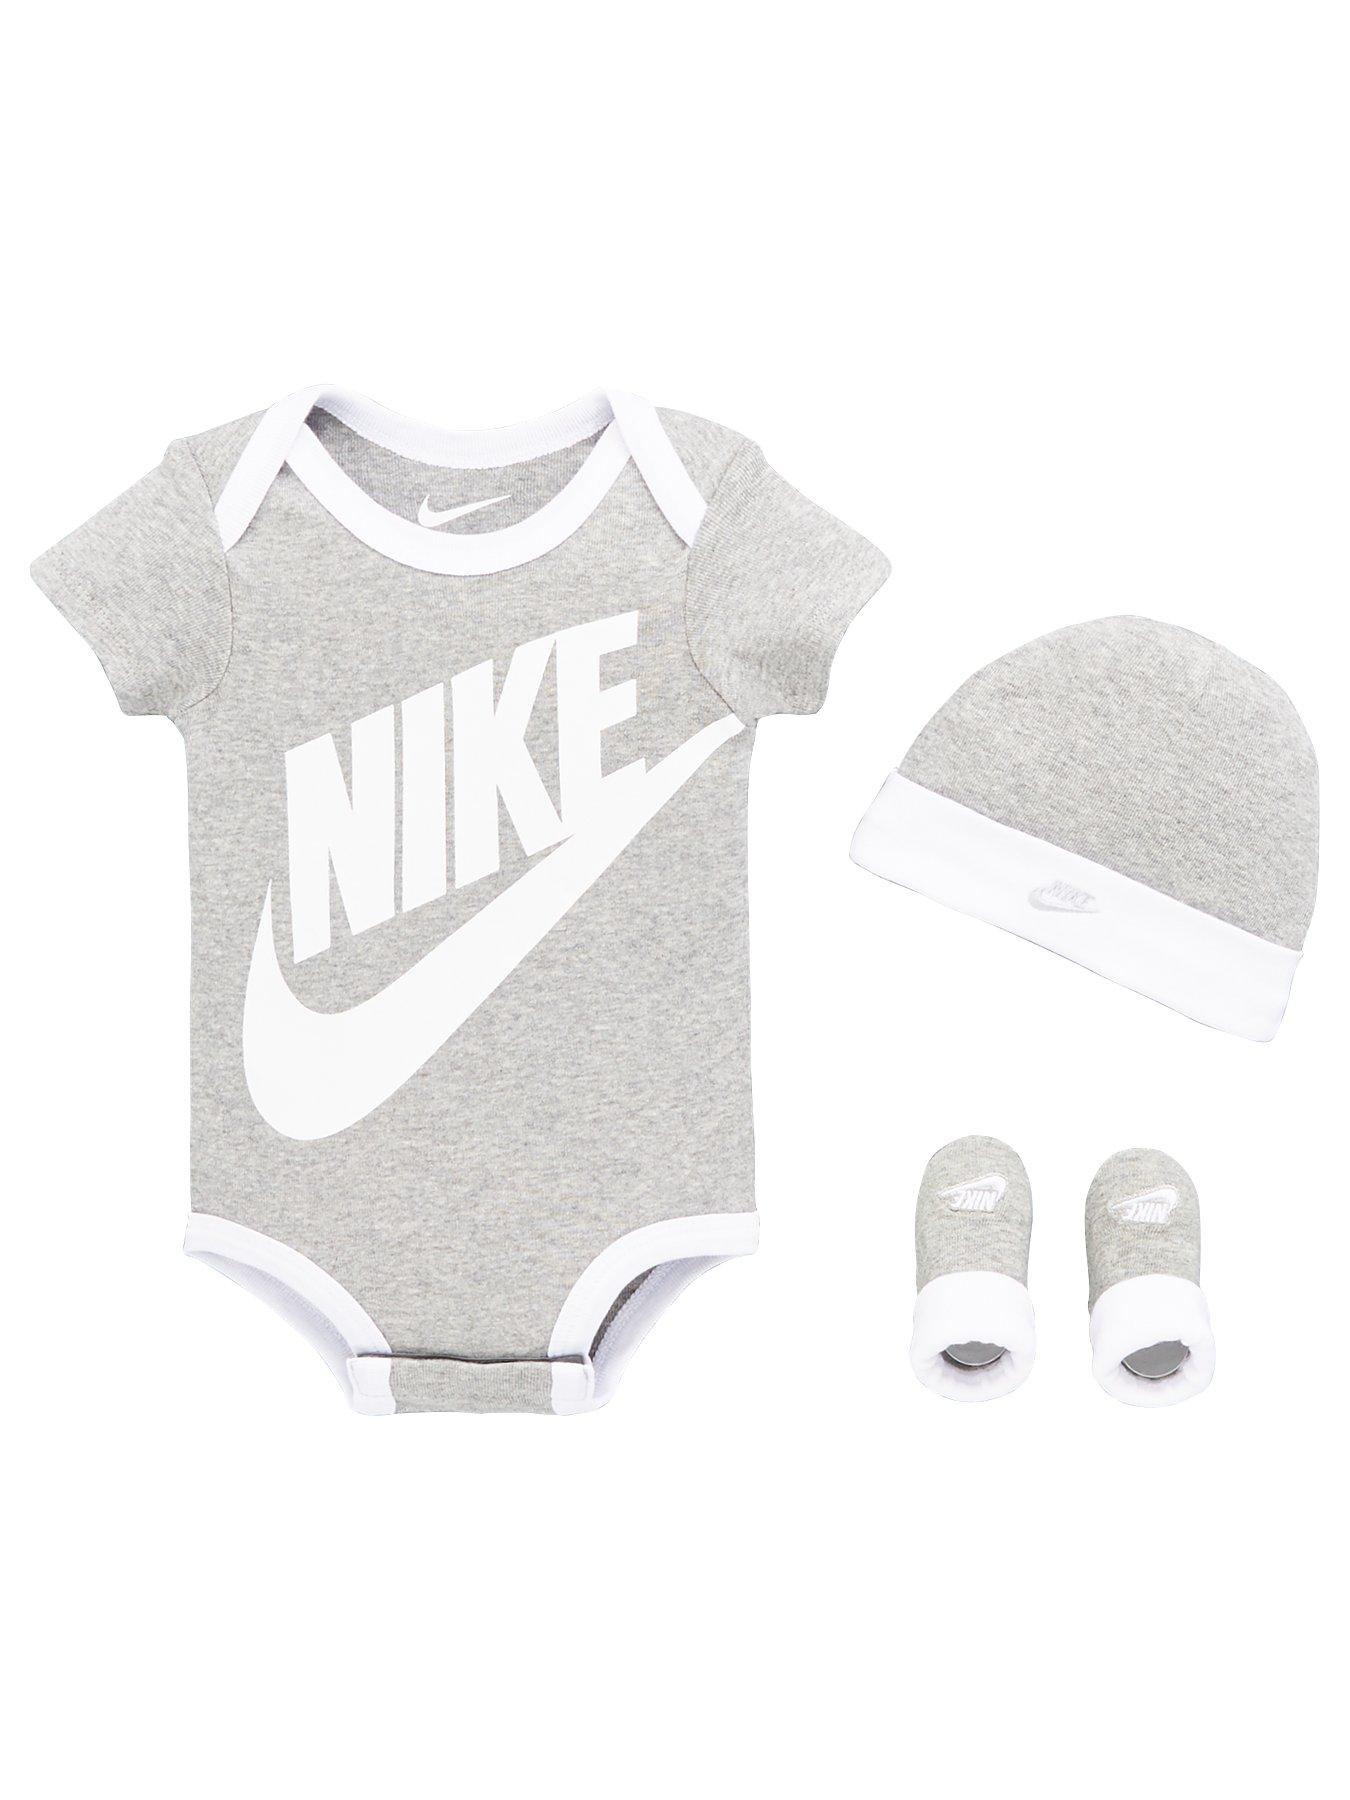 Inspector Rústico postura 0/3 months | Child & baby | Nike | www.very.co.uk